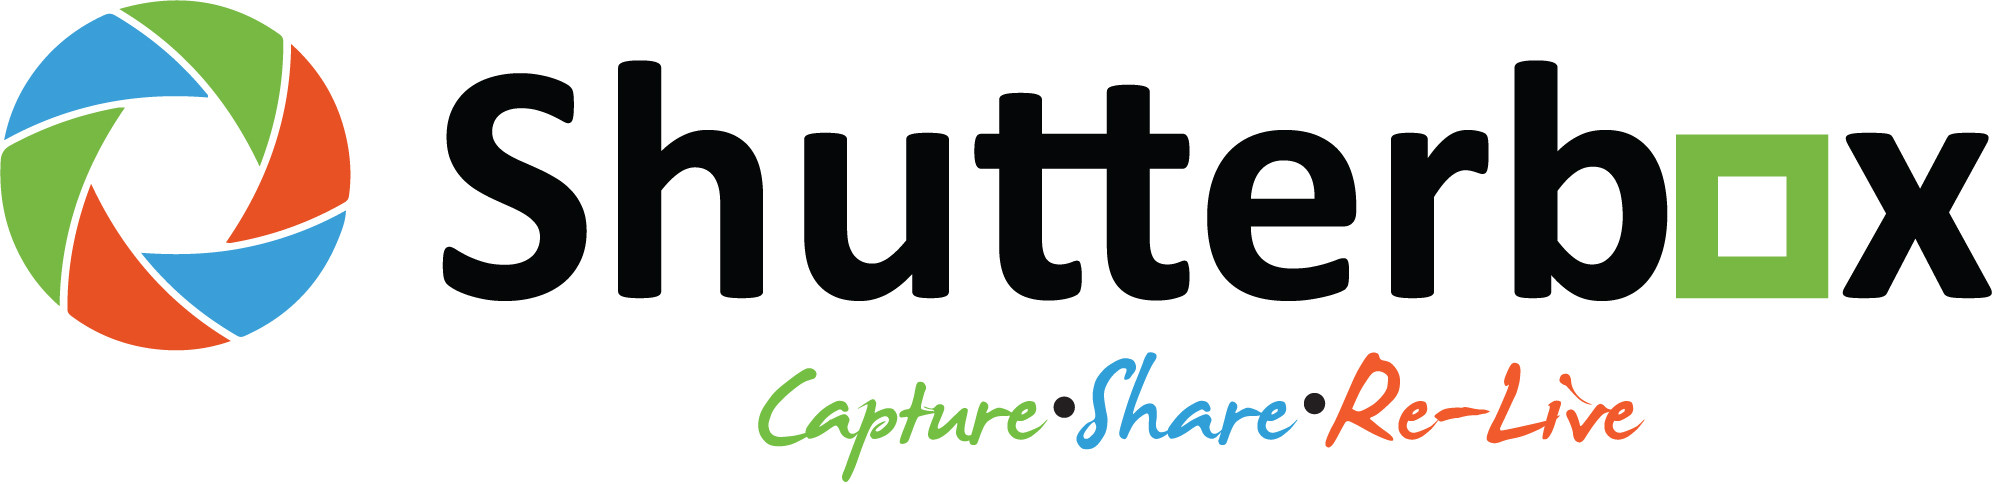 Shutter Box - Zenith Media Ltd